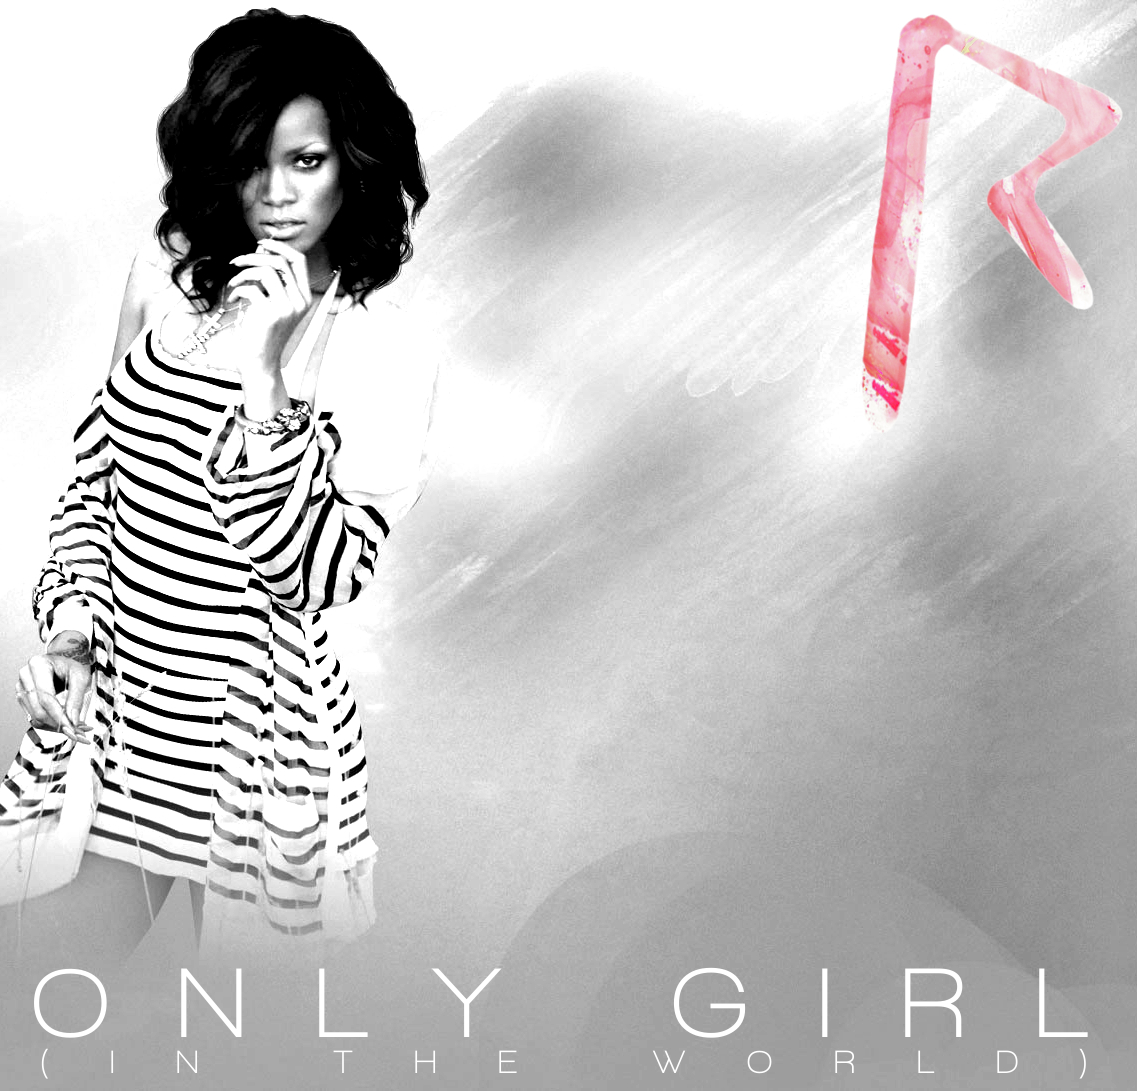 http://2.bp.blogspot.com/-i93KTvi661k/TbIOjQV7IbI/AAAAAAAAAB4/W6fppAhweTY/s1600/Rihanna-Only-Girl-In-The-World-FanMade1.jpg